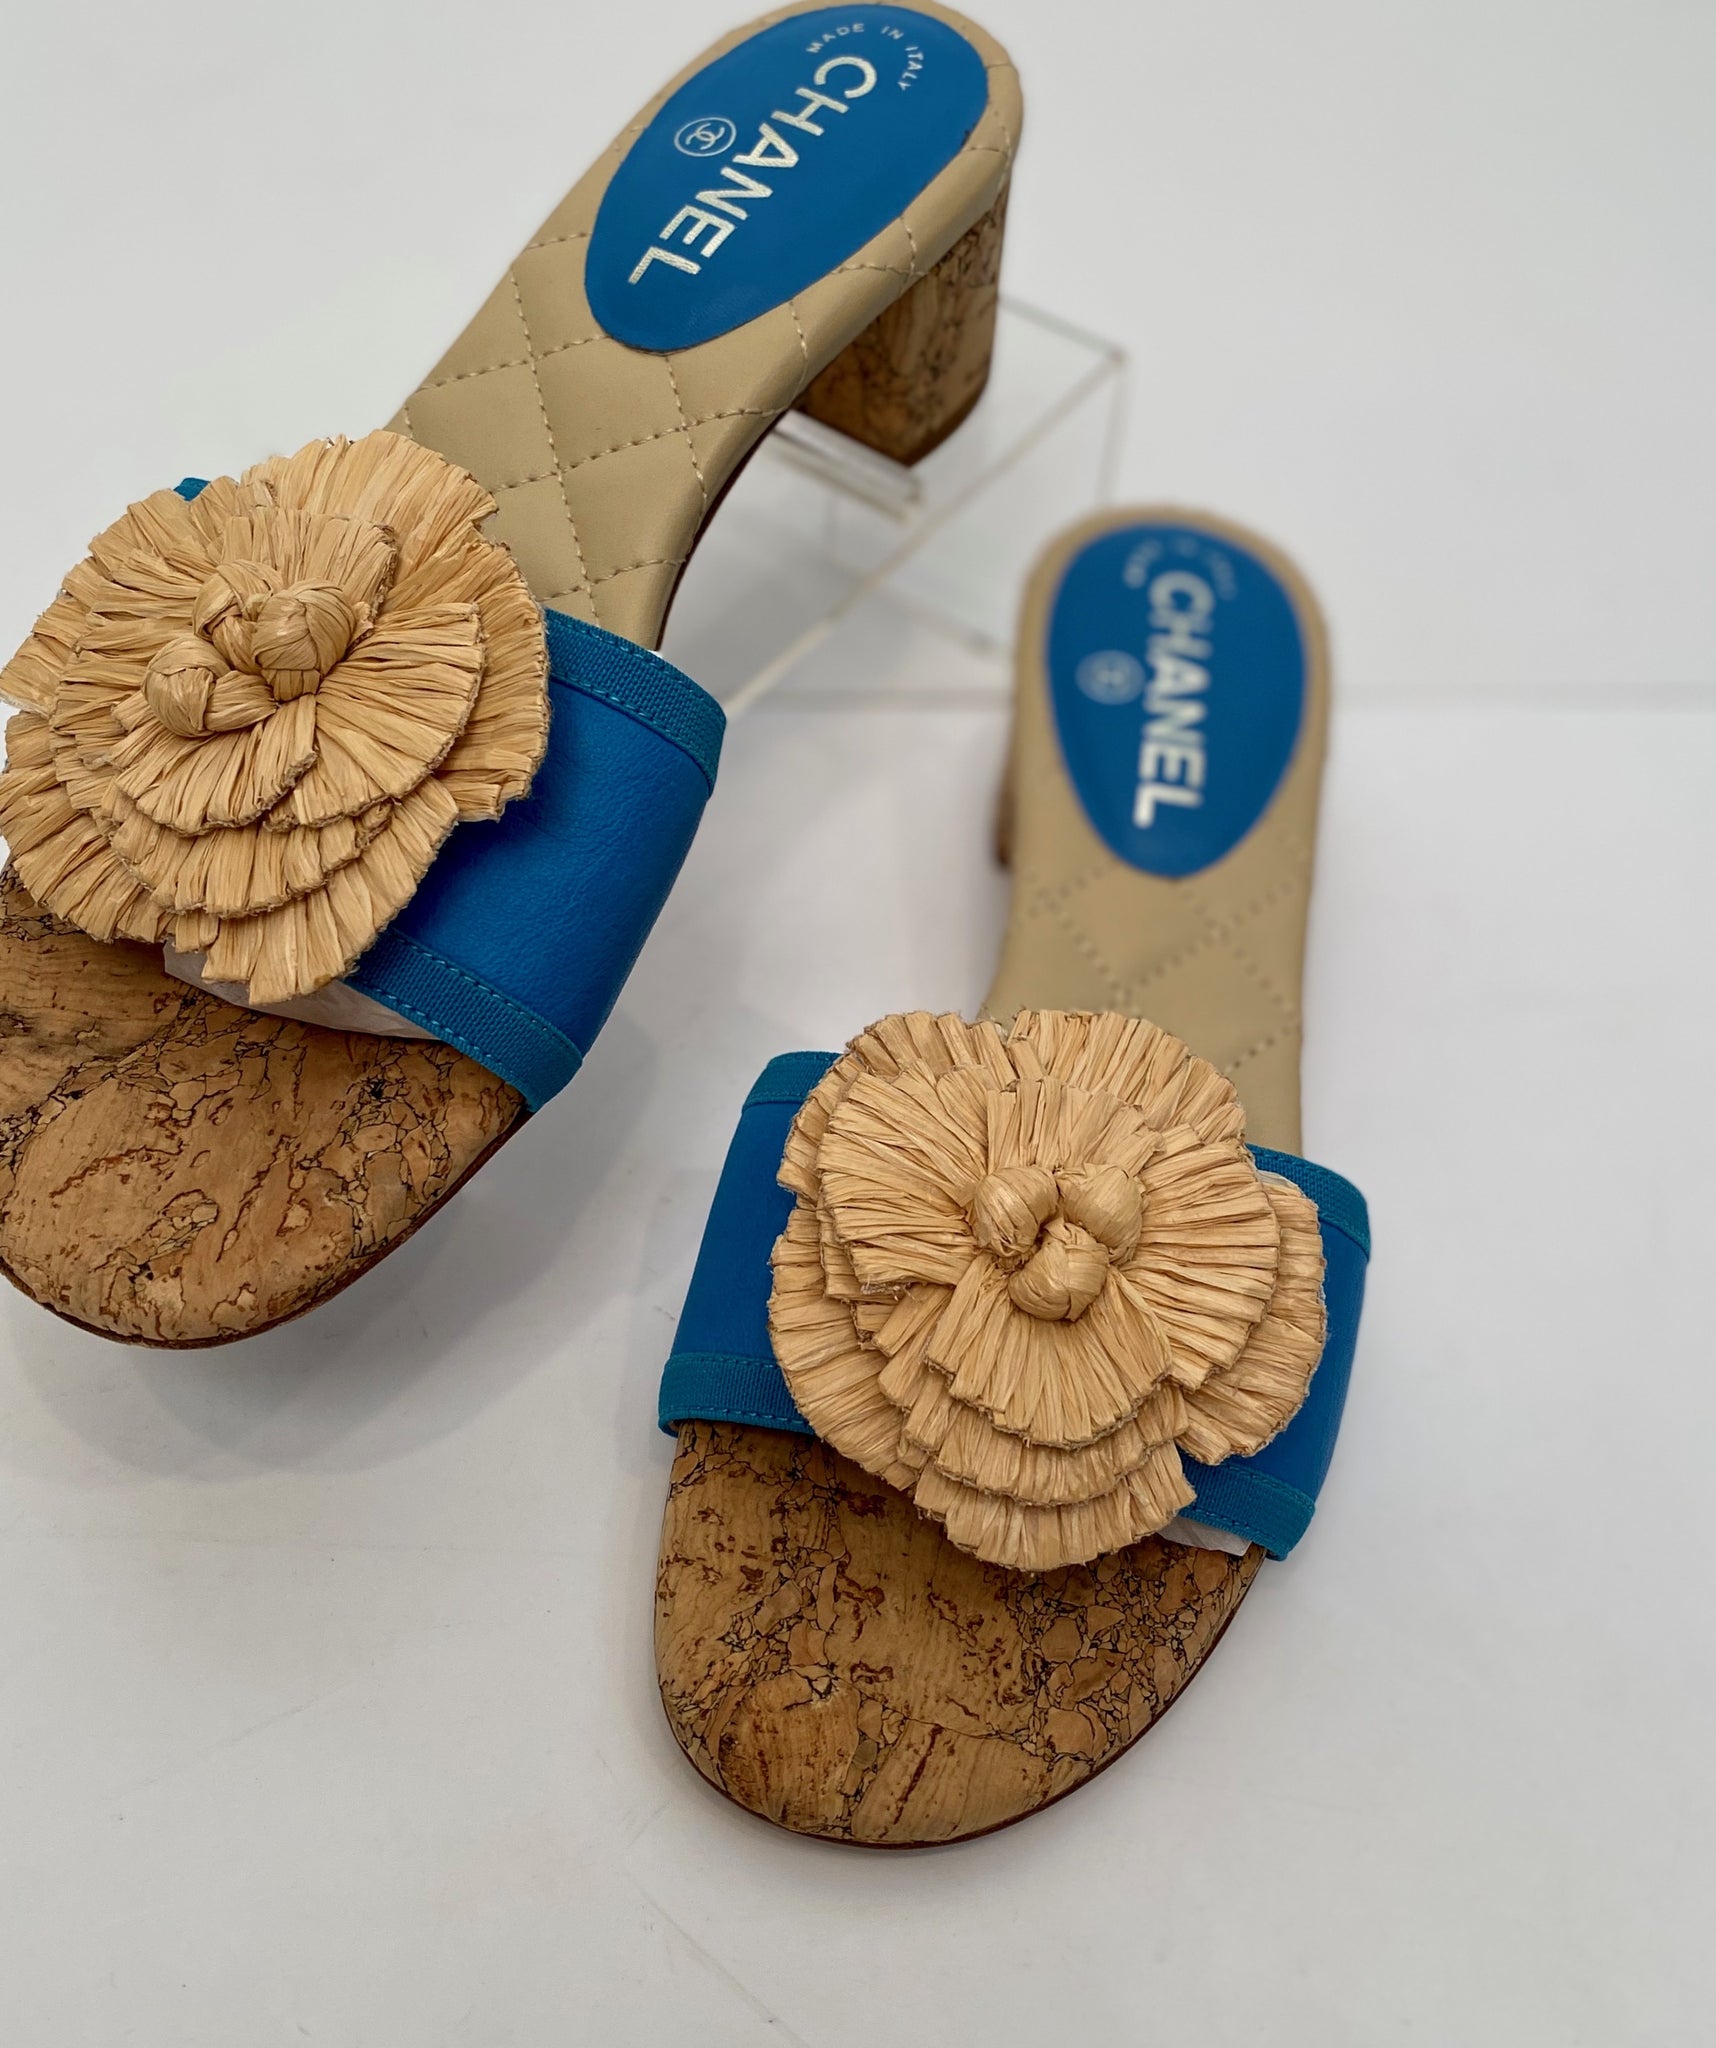 New Chanel Turquoise Cork Camellia Straw Details Slide Sandals Heels CC Logo 37